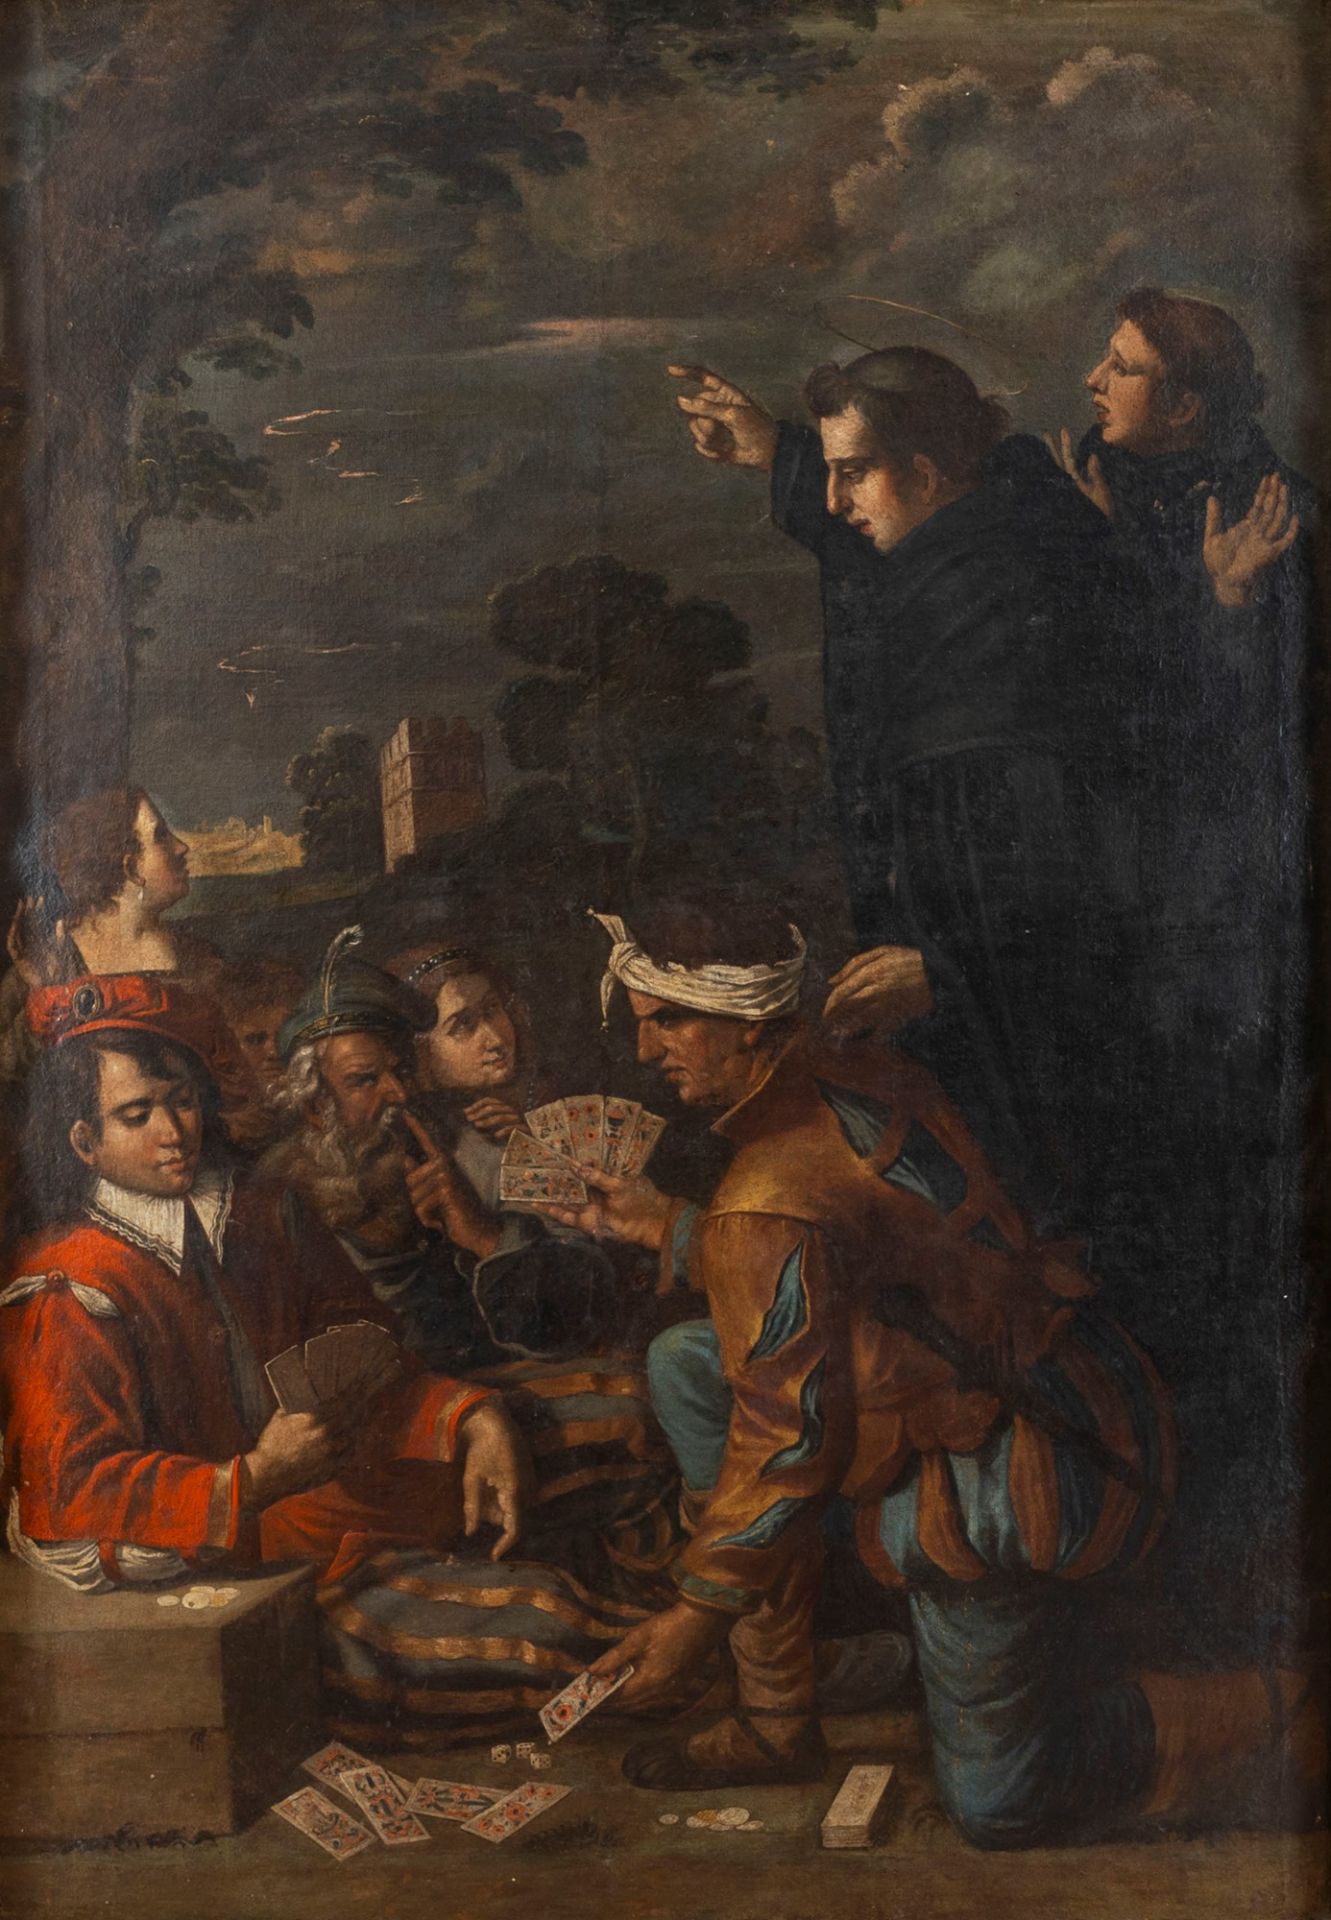 Giuseppe Caletti (Ferrara, circa 1600-1660) - Saint Philip Benizi strikes the criminals